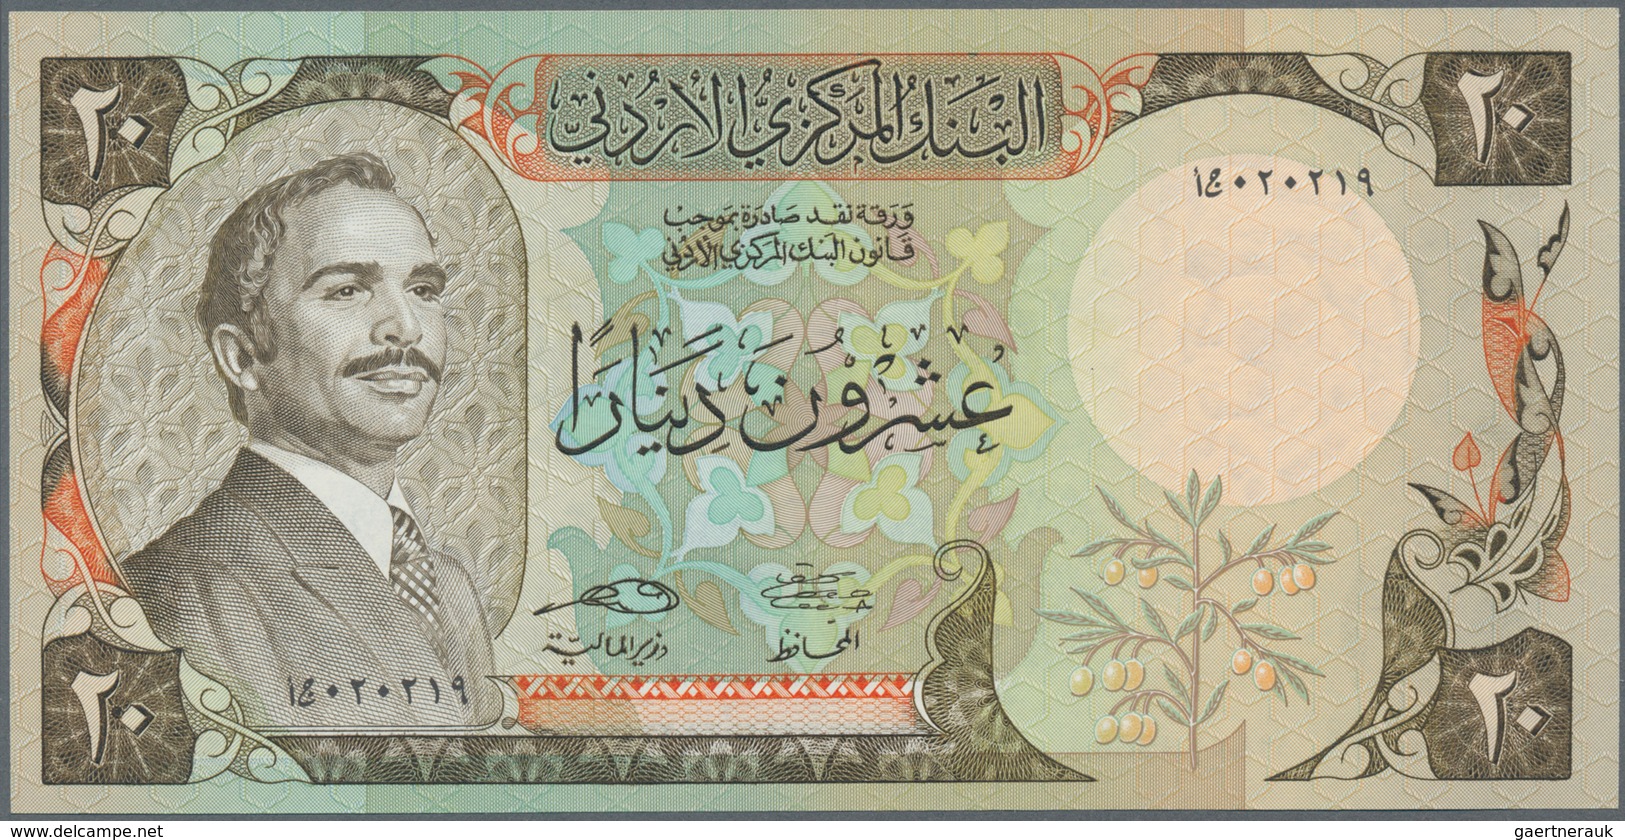 Jordan / Jordanien: Pair With 5 Dinars ND(1960's) P.15b (UNC) And 20 Dinars ND(1988) P.21c (UNC). (2 - Jordanien